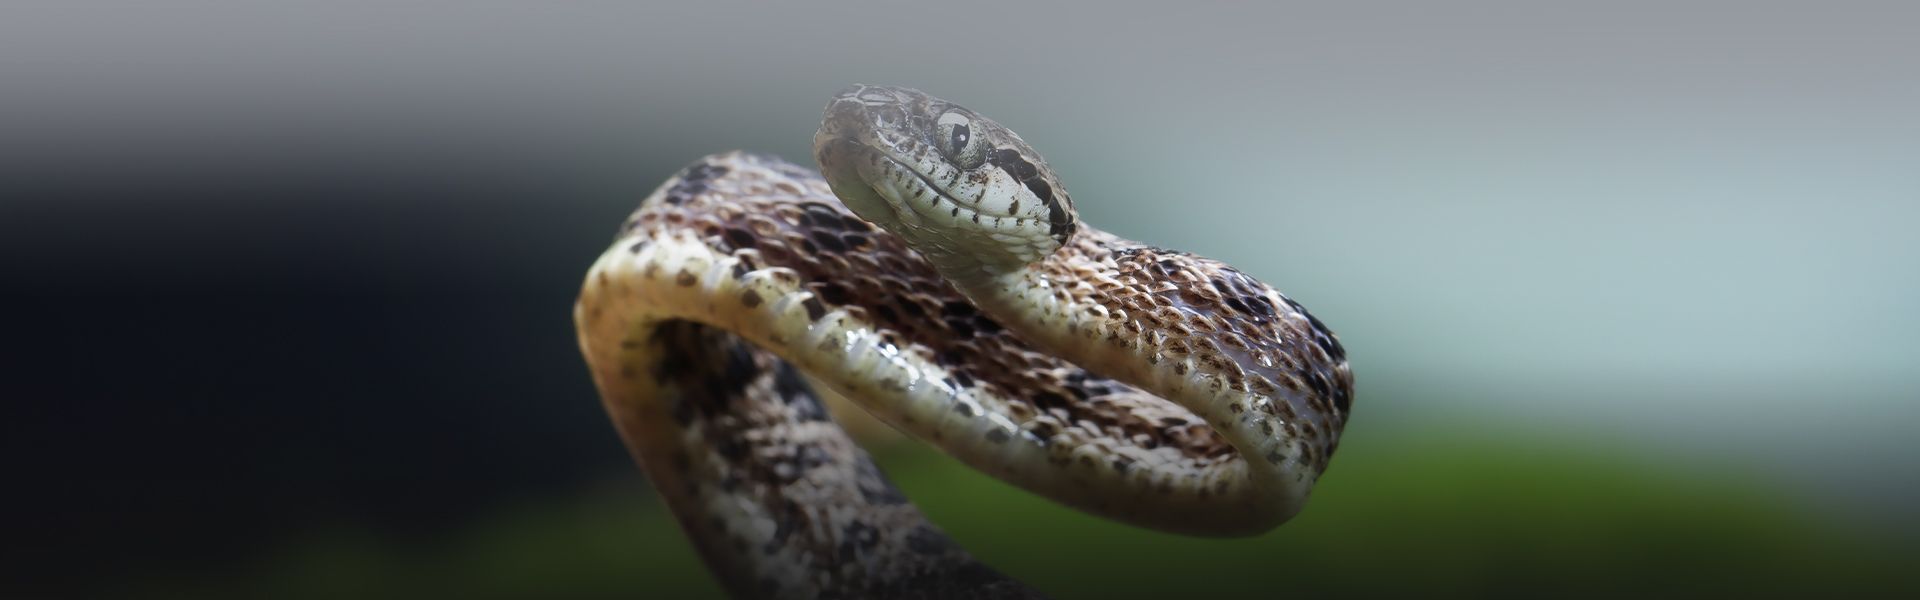 brown snake closeup